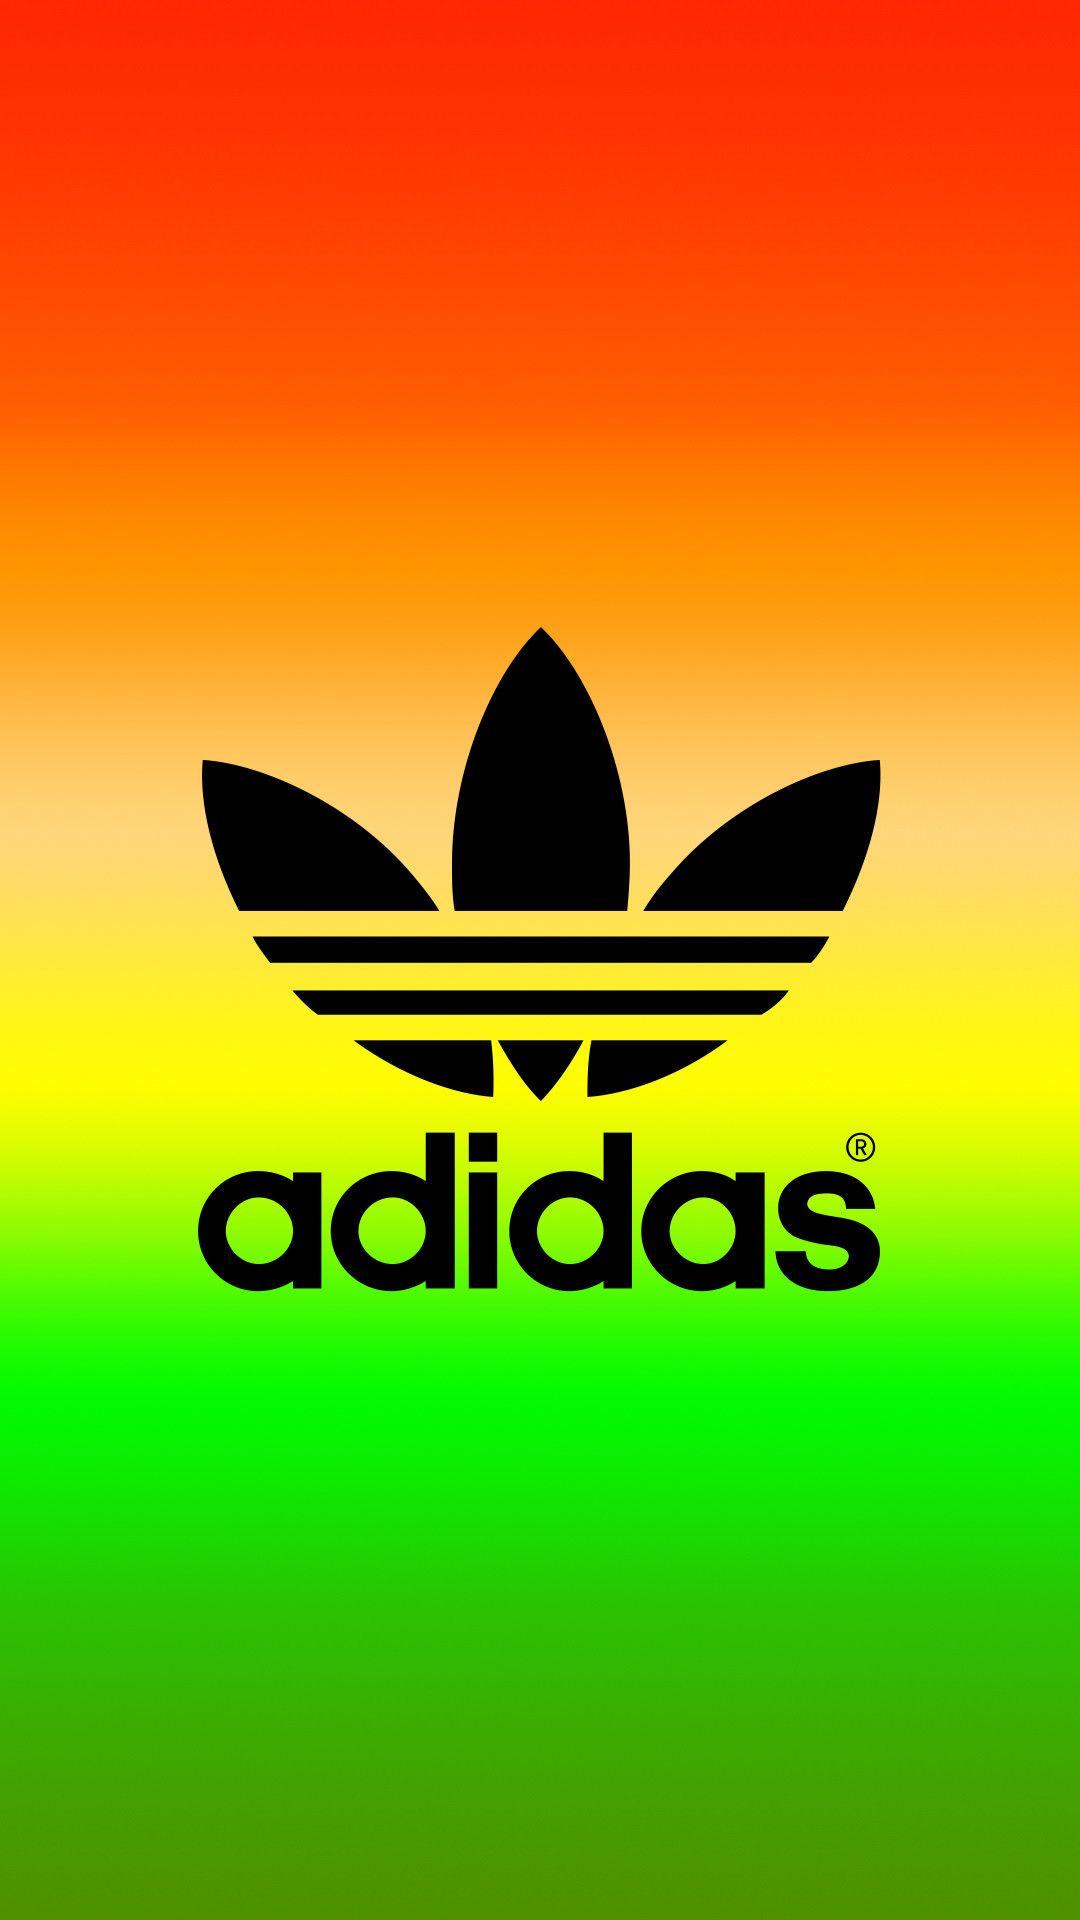 Adidas Logo iPhone Wallpapers - Top 